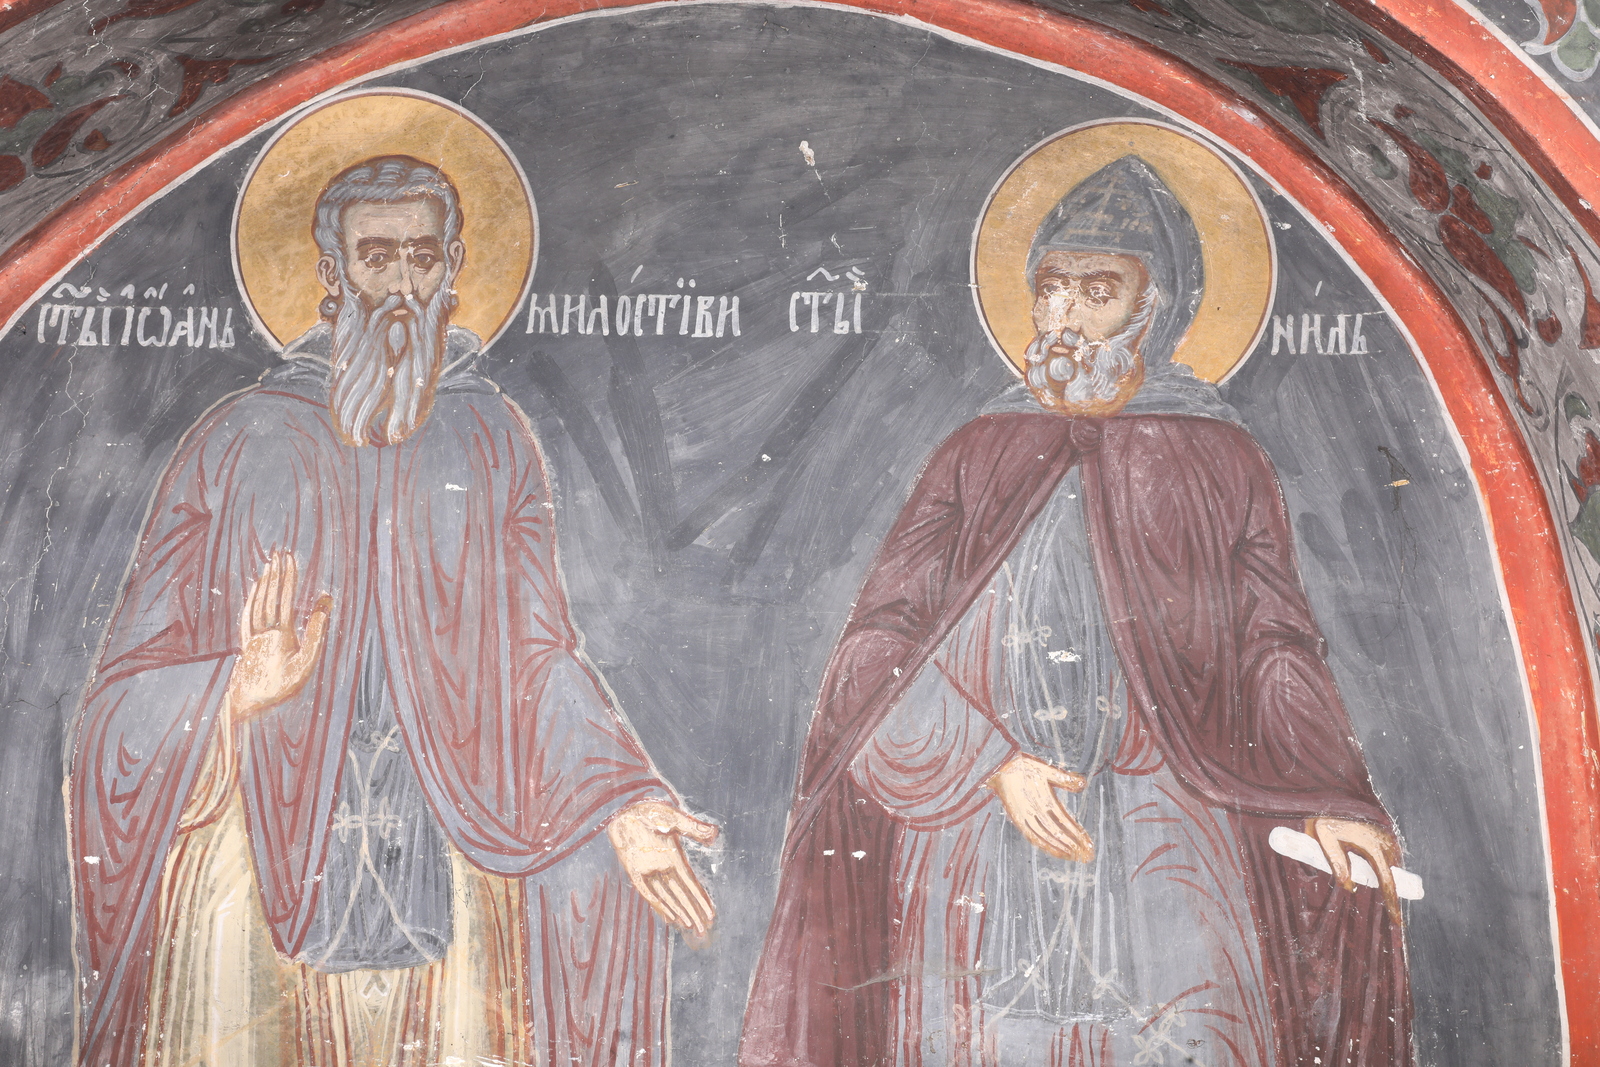 Saint John the Merciful and Saint Nilus